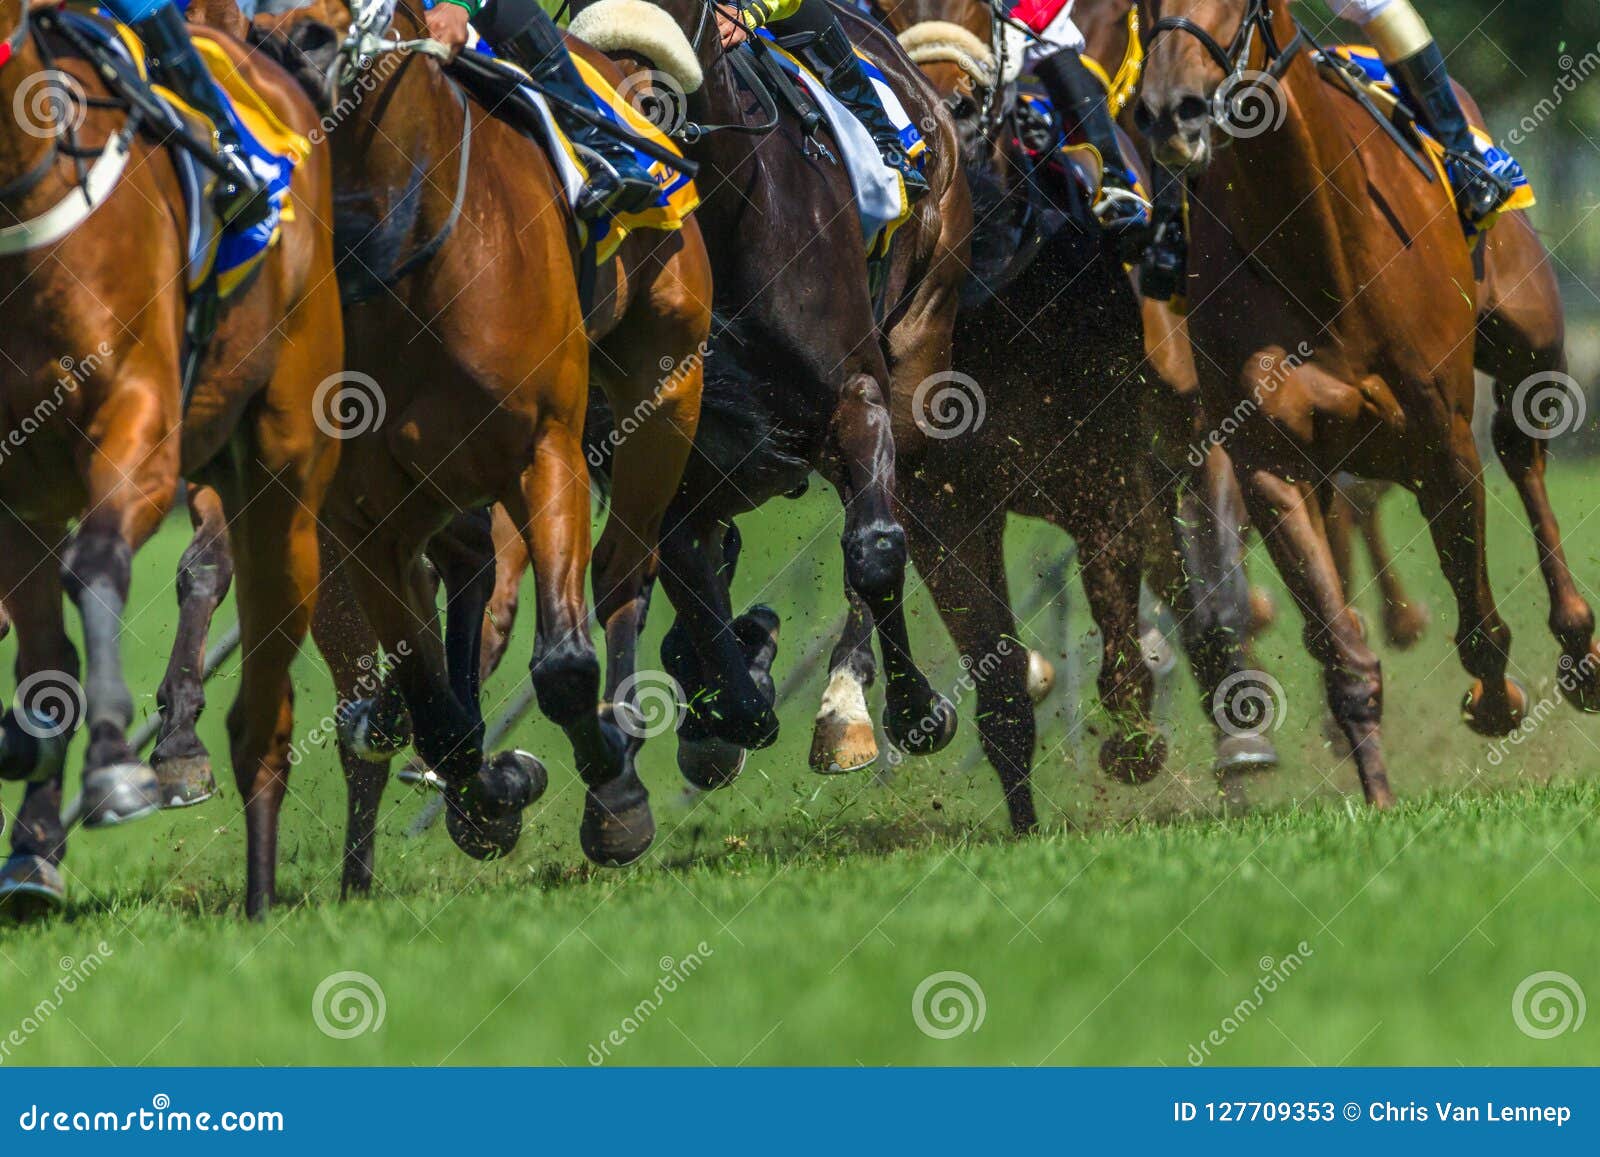 race horses running legs hoofs track close up